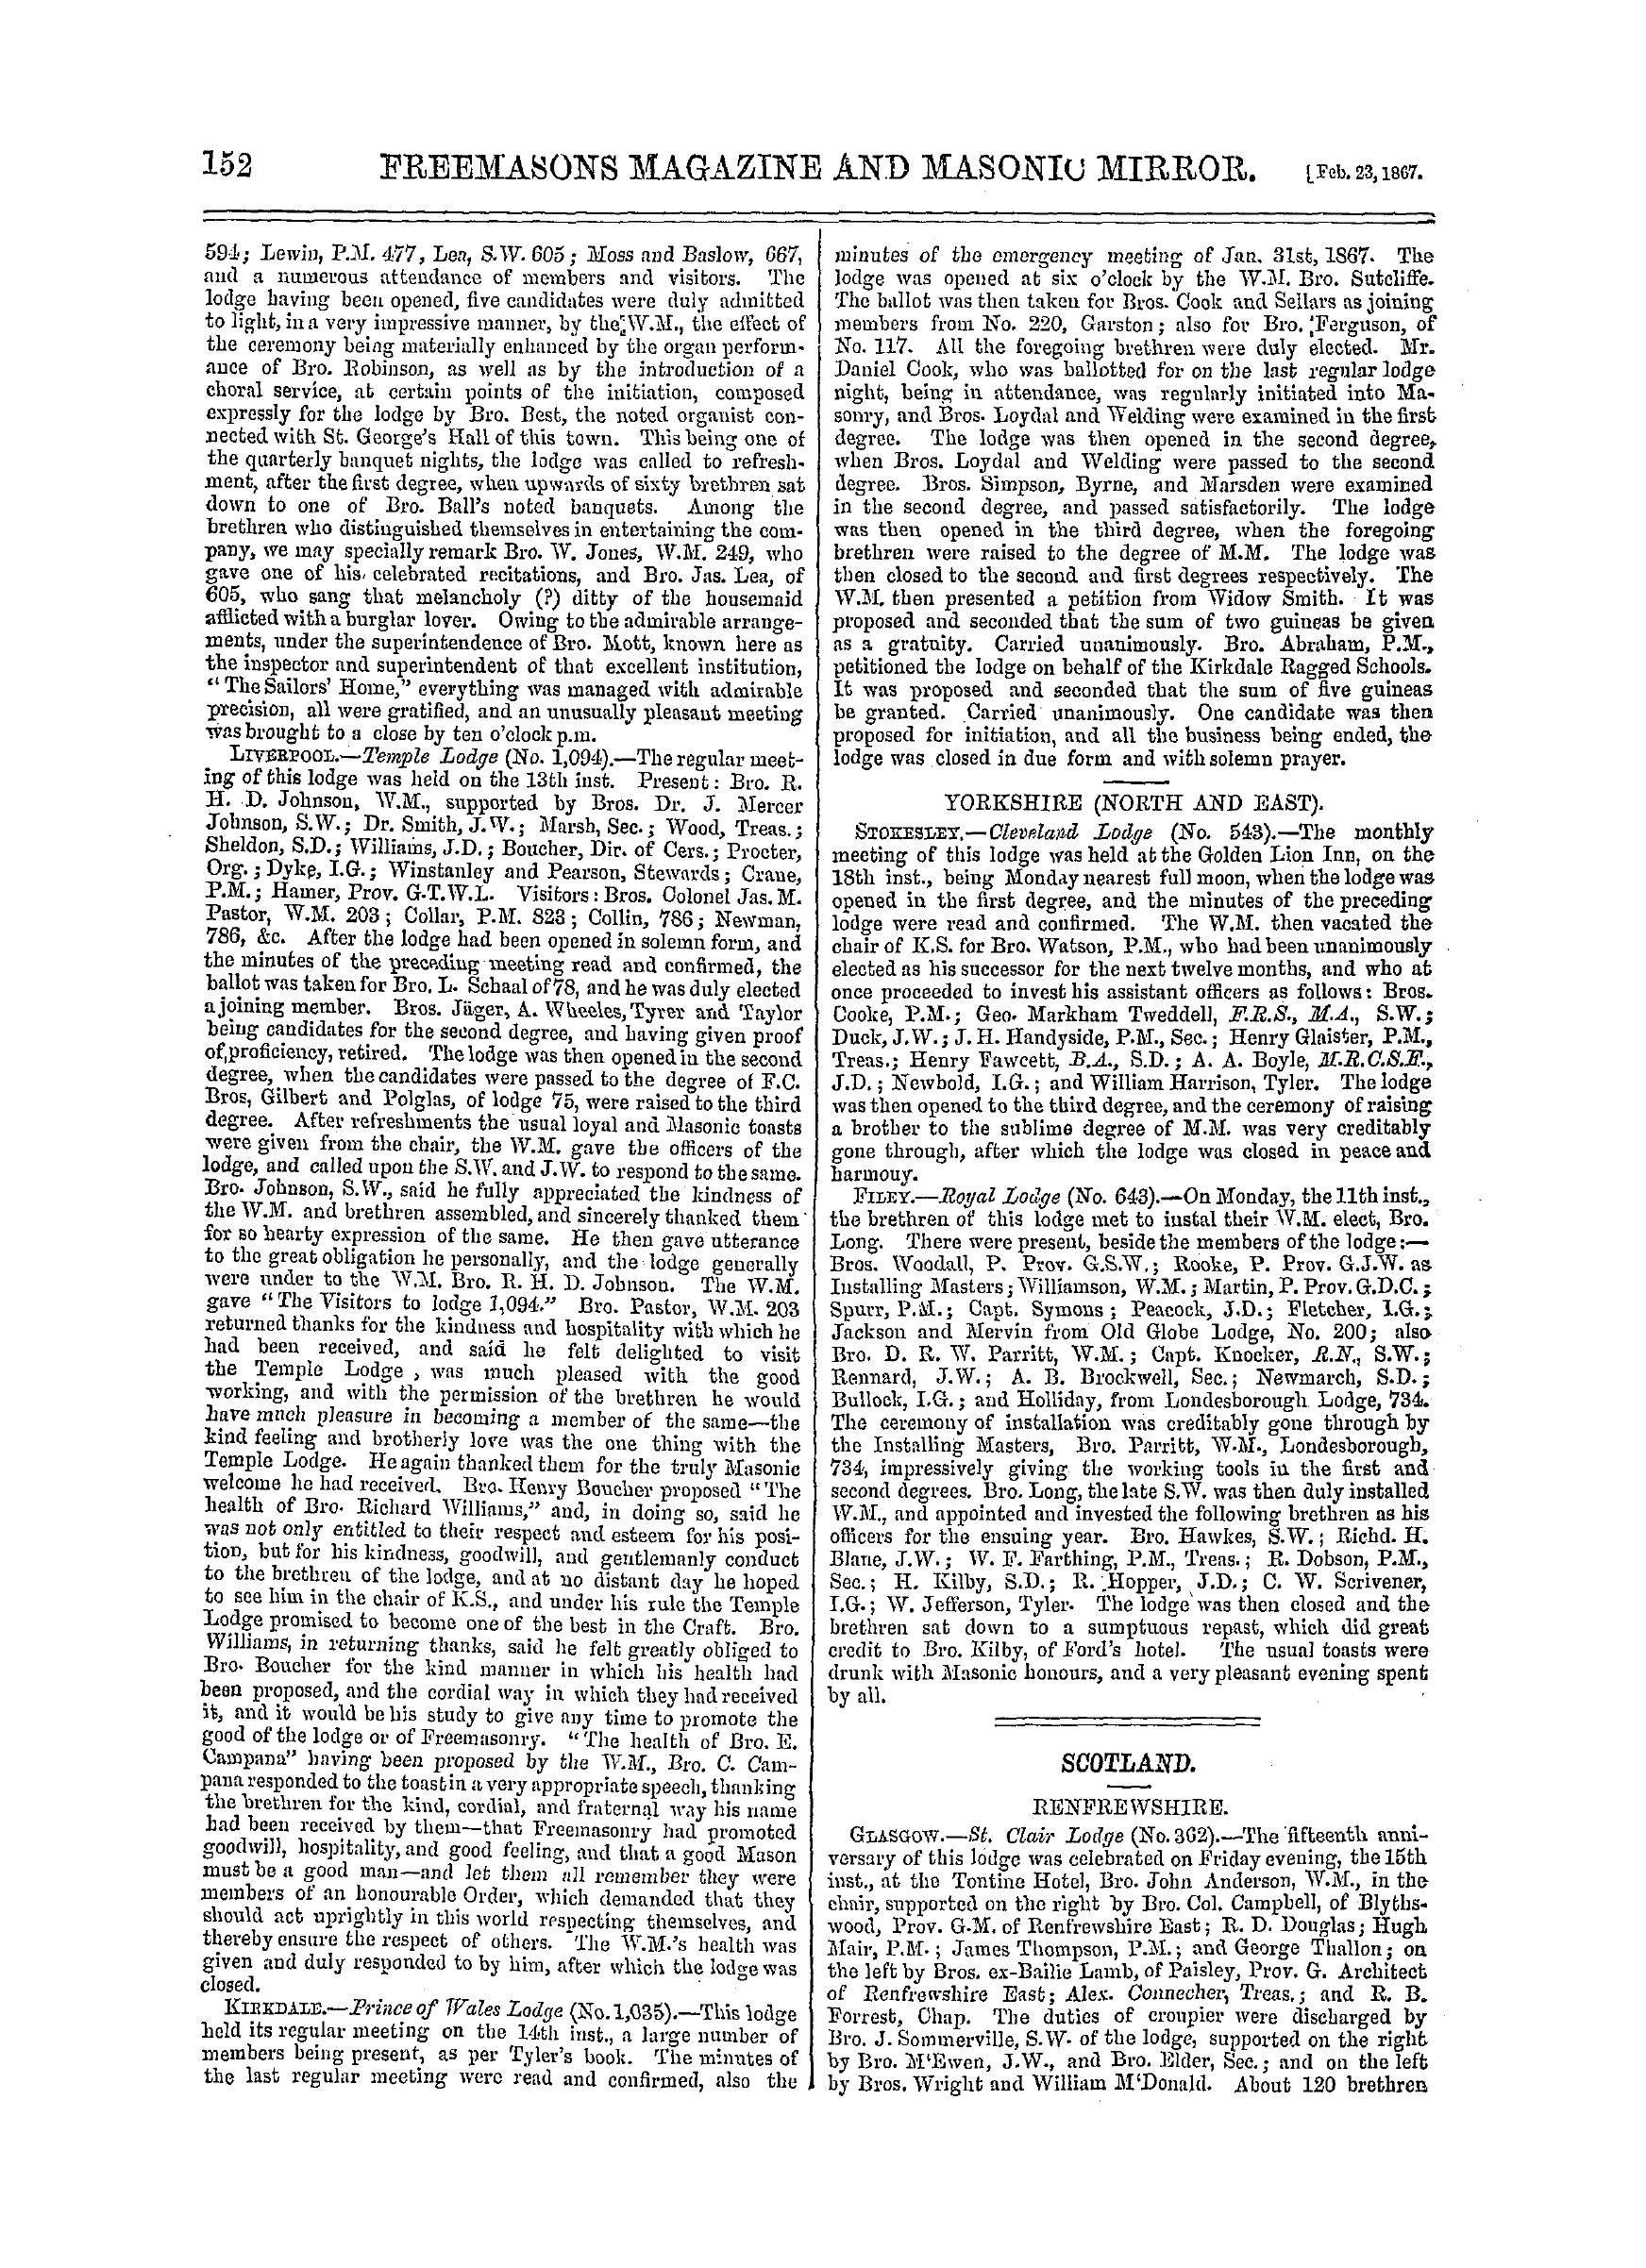 The Freemasons' Monthly Magazine: 1867-02-23 - Provincial.